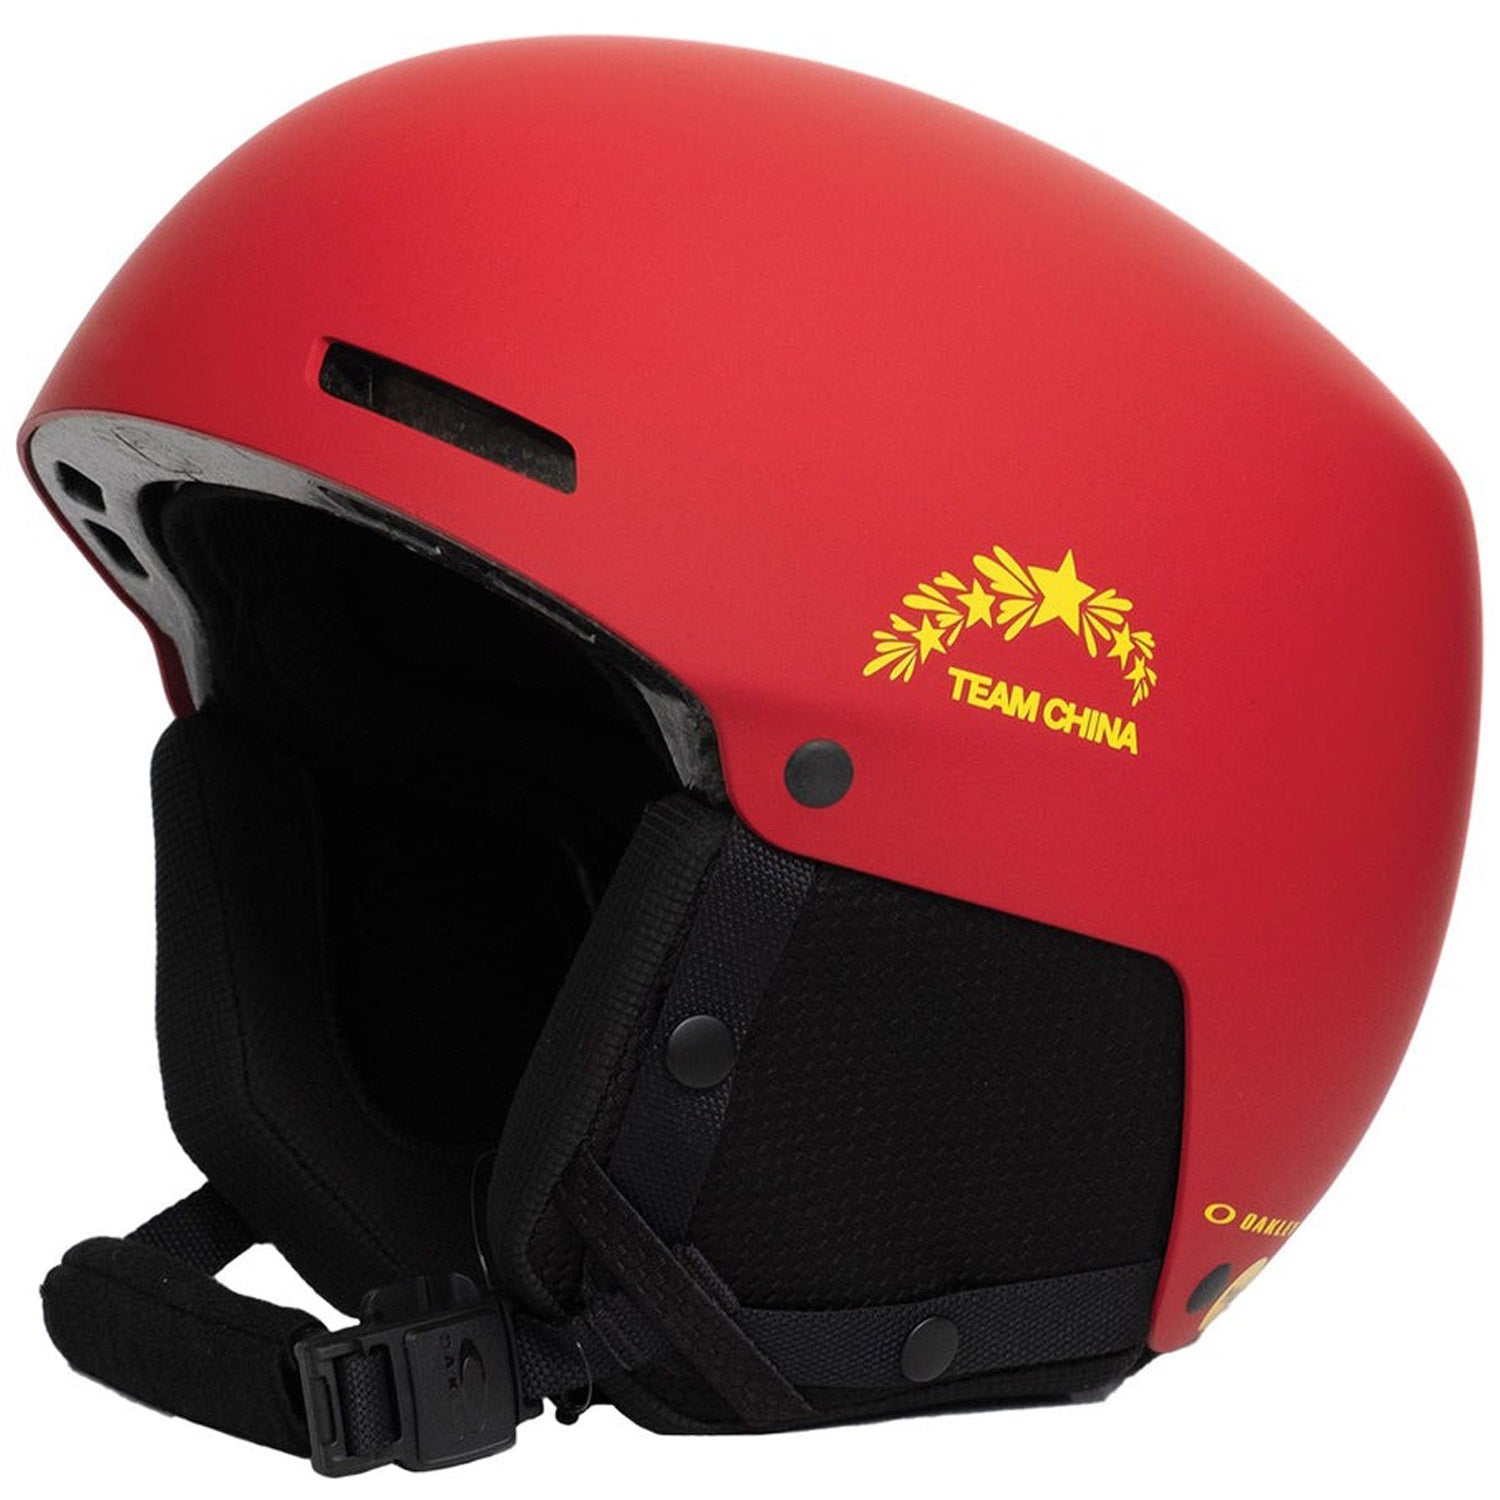 Mod1 Pro Asian Fit Snow Helmet